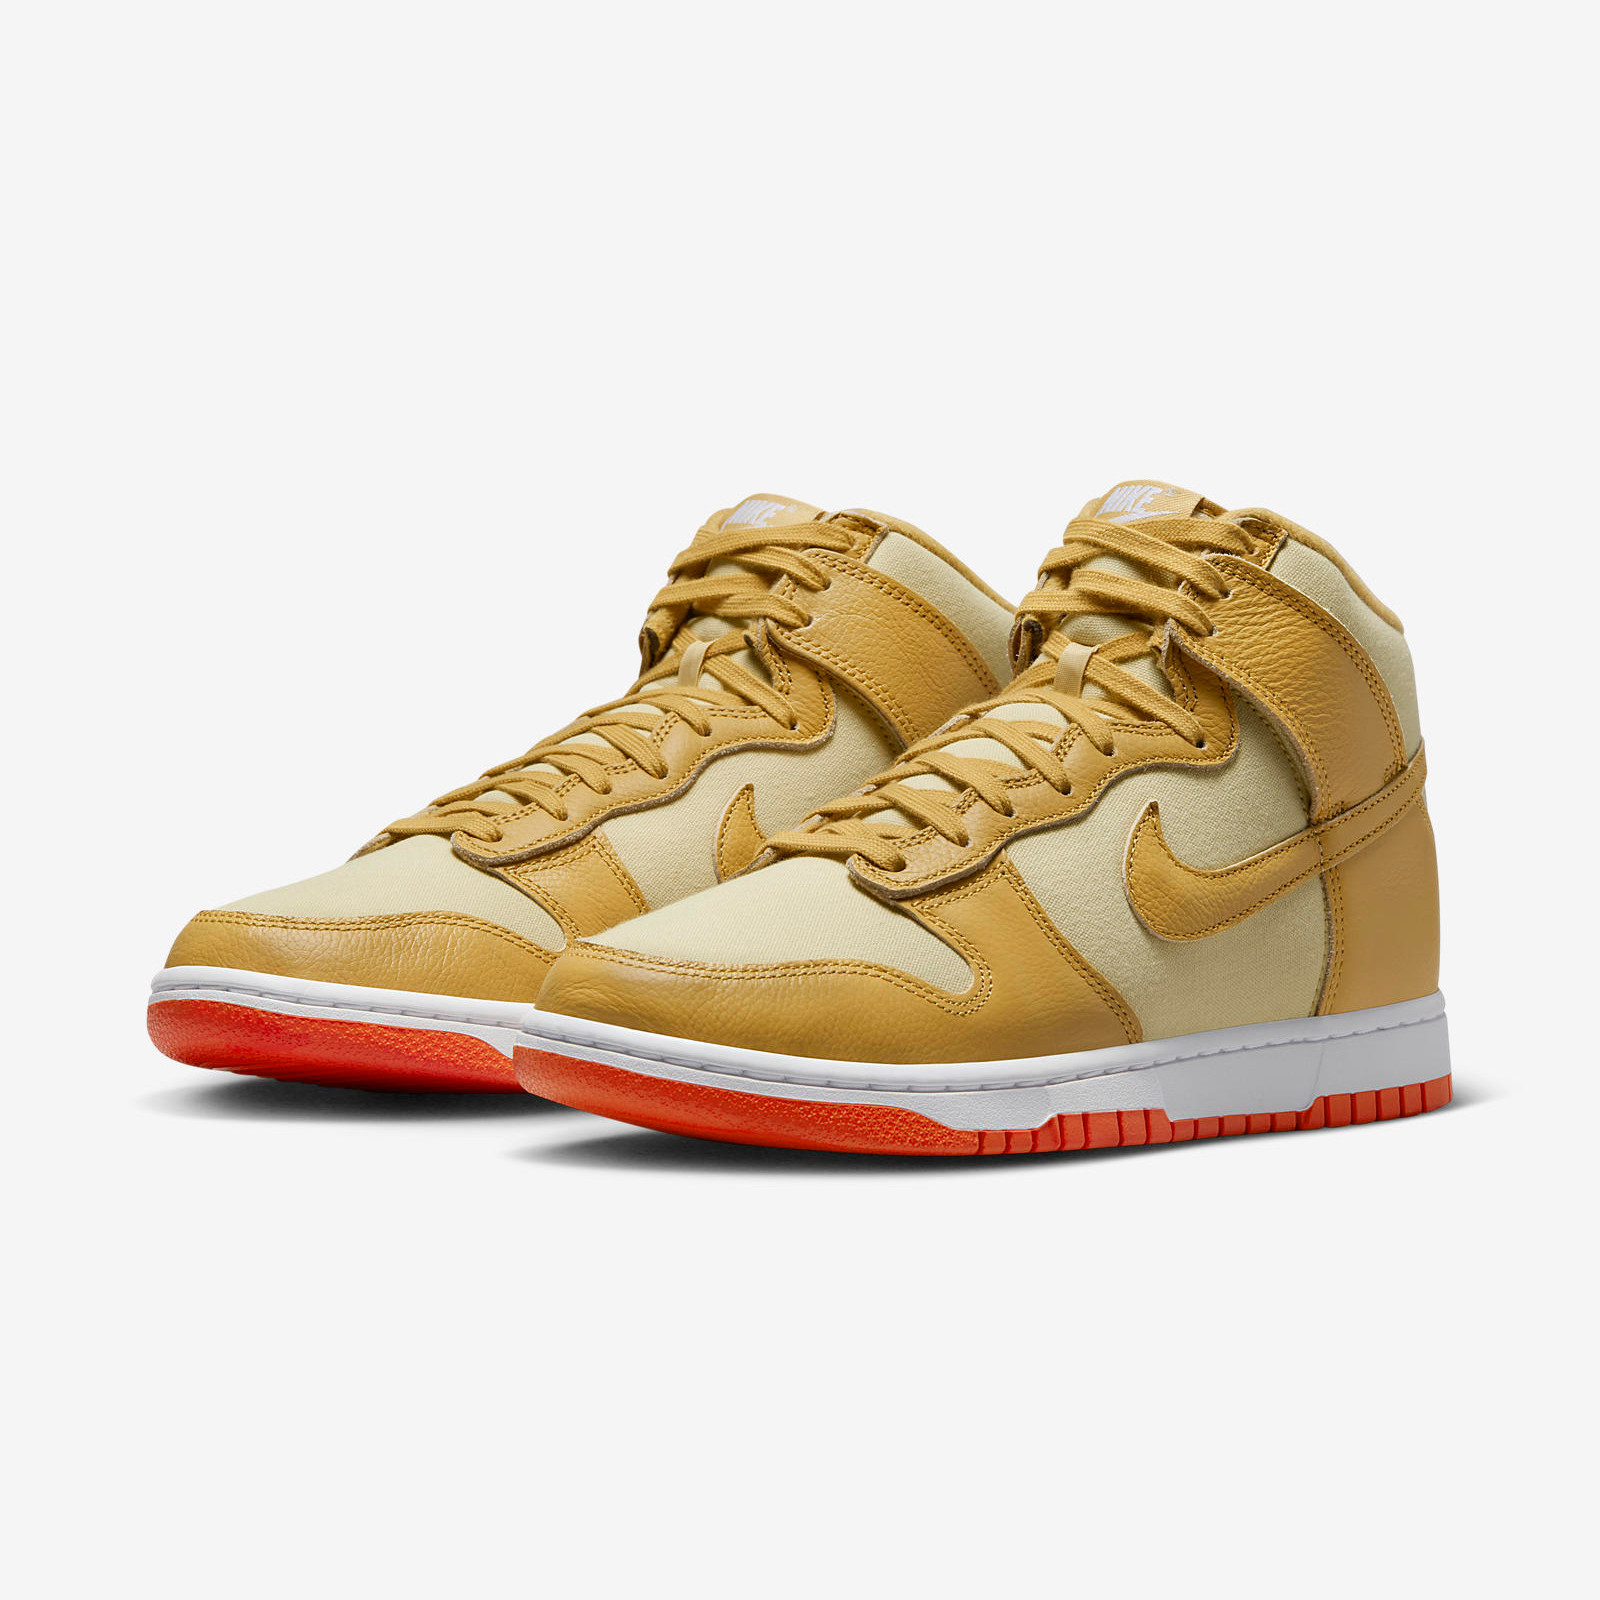 Nike Dunk High
« Wheat Gold »